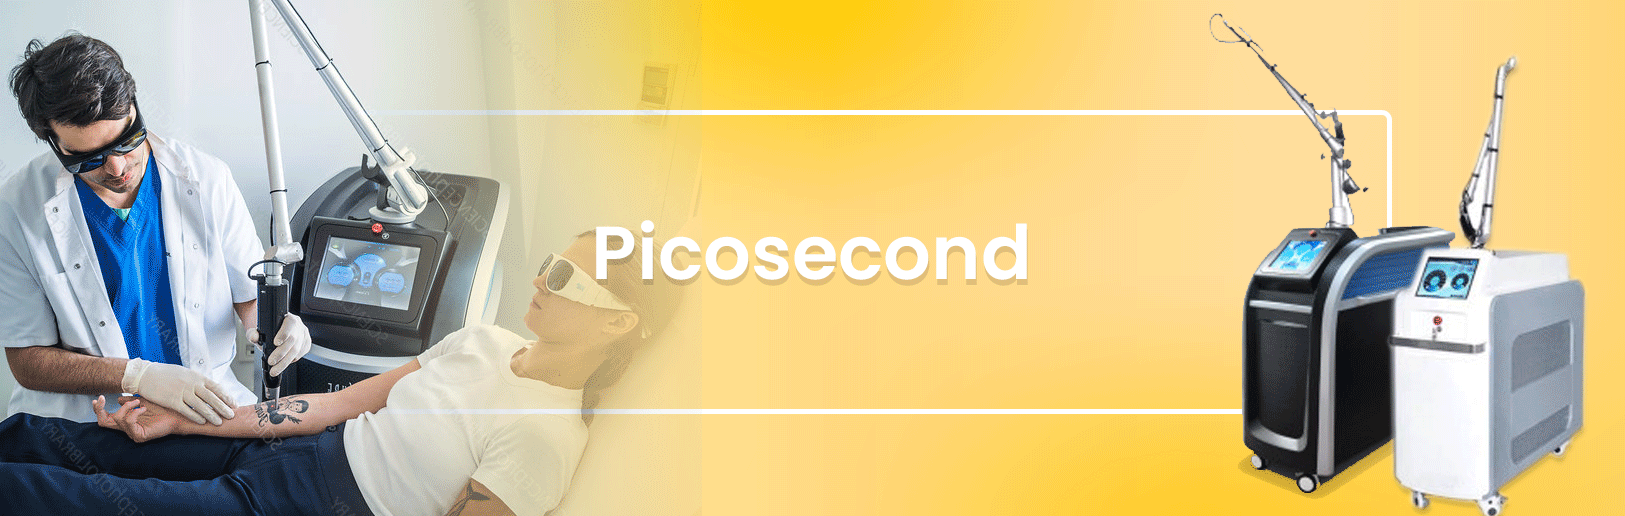 Picosecond﻿ Laser